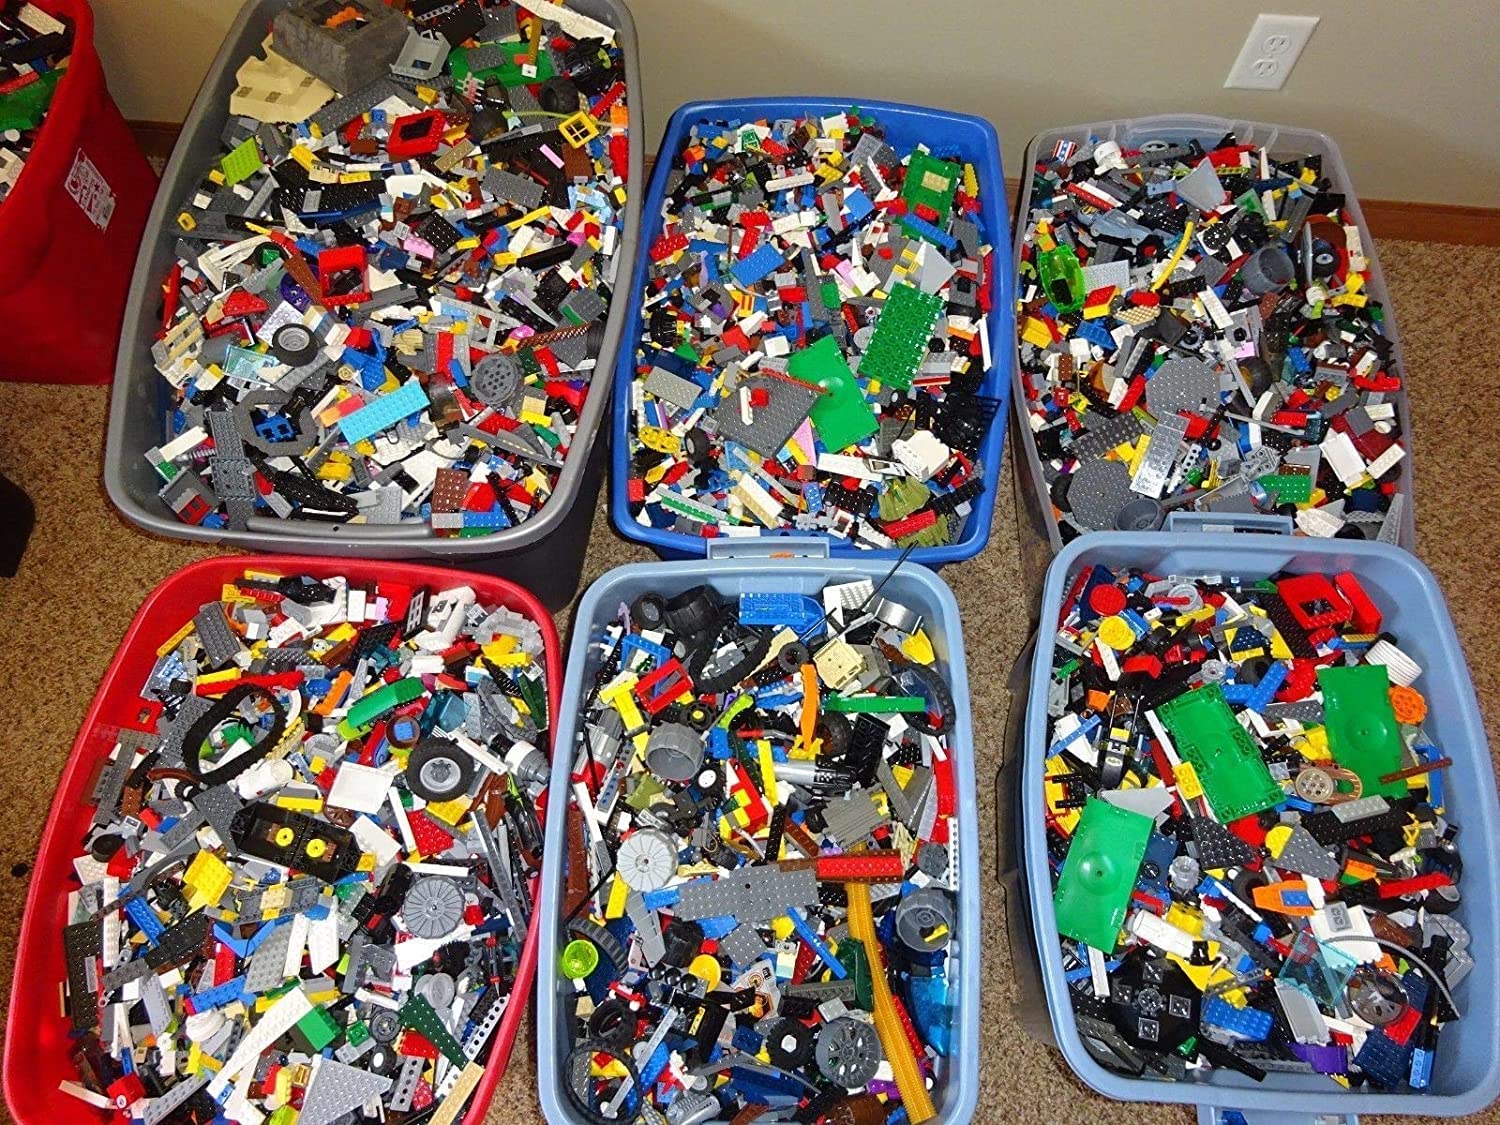 Photograph of 6 giant buckets of random legos.